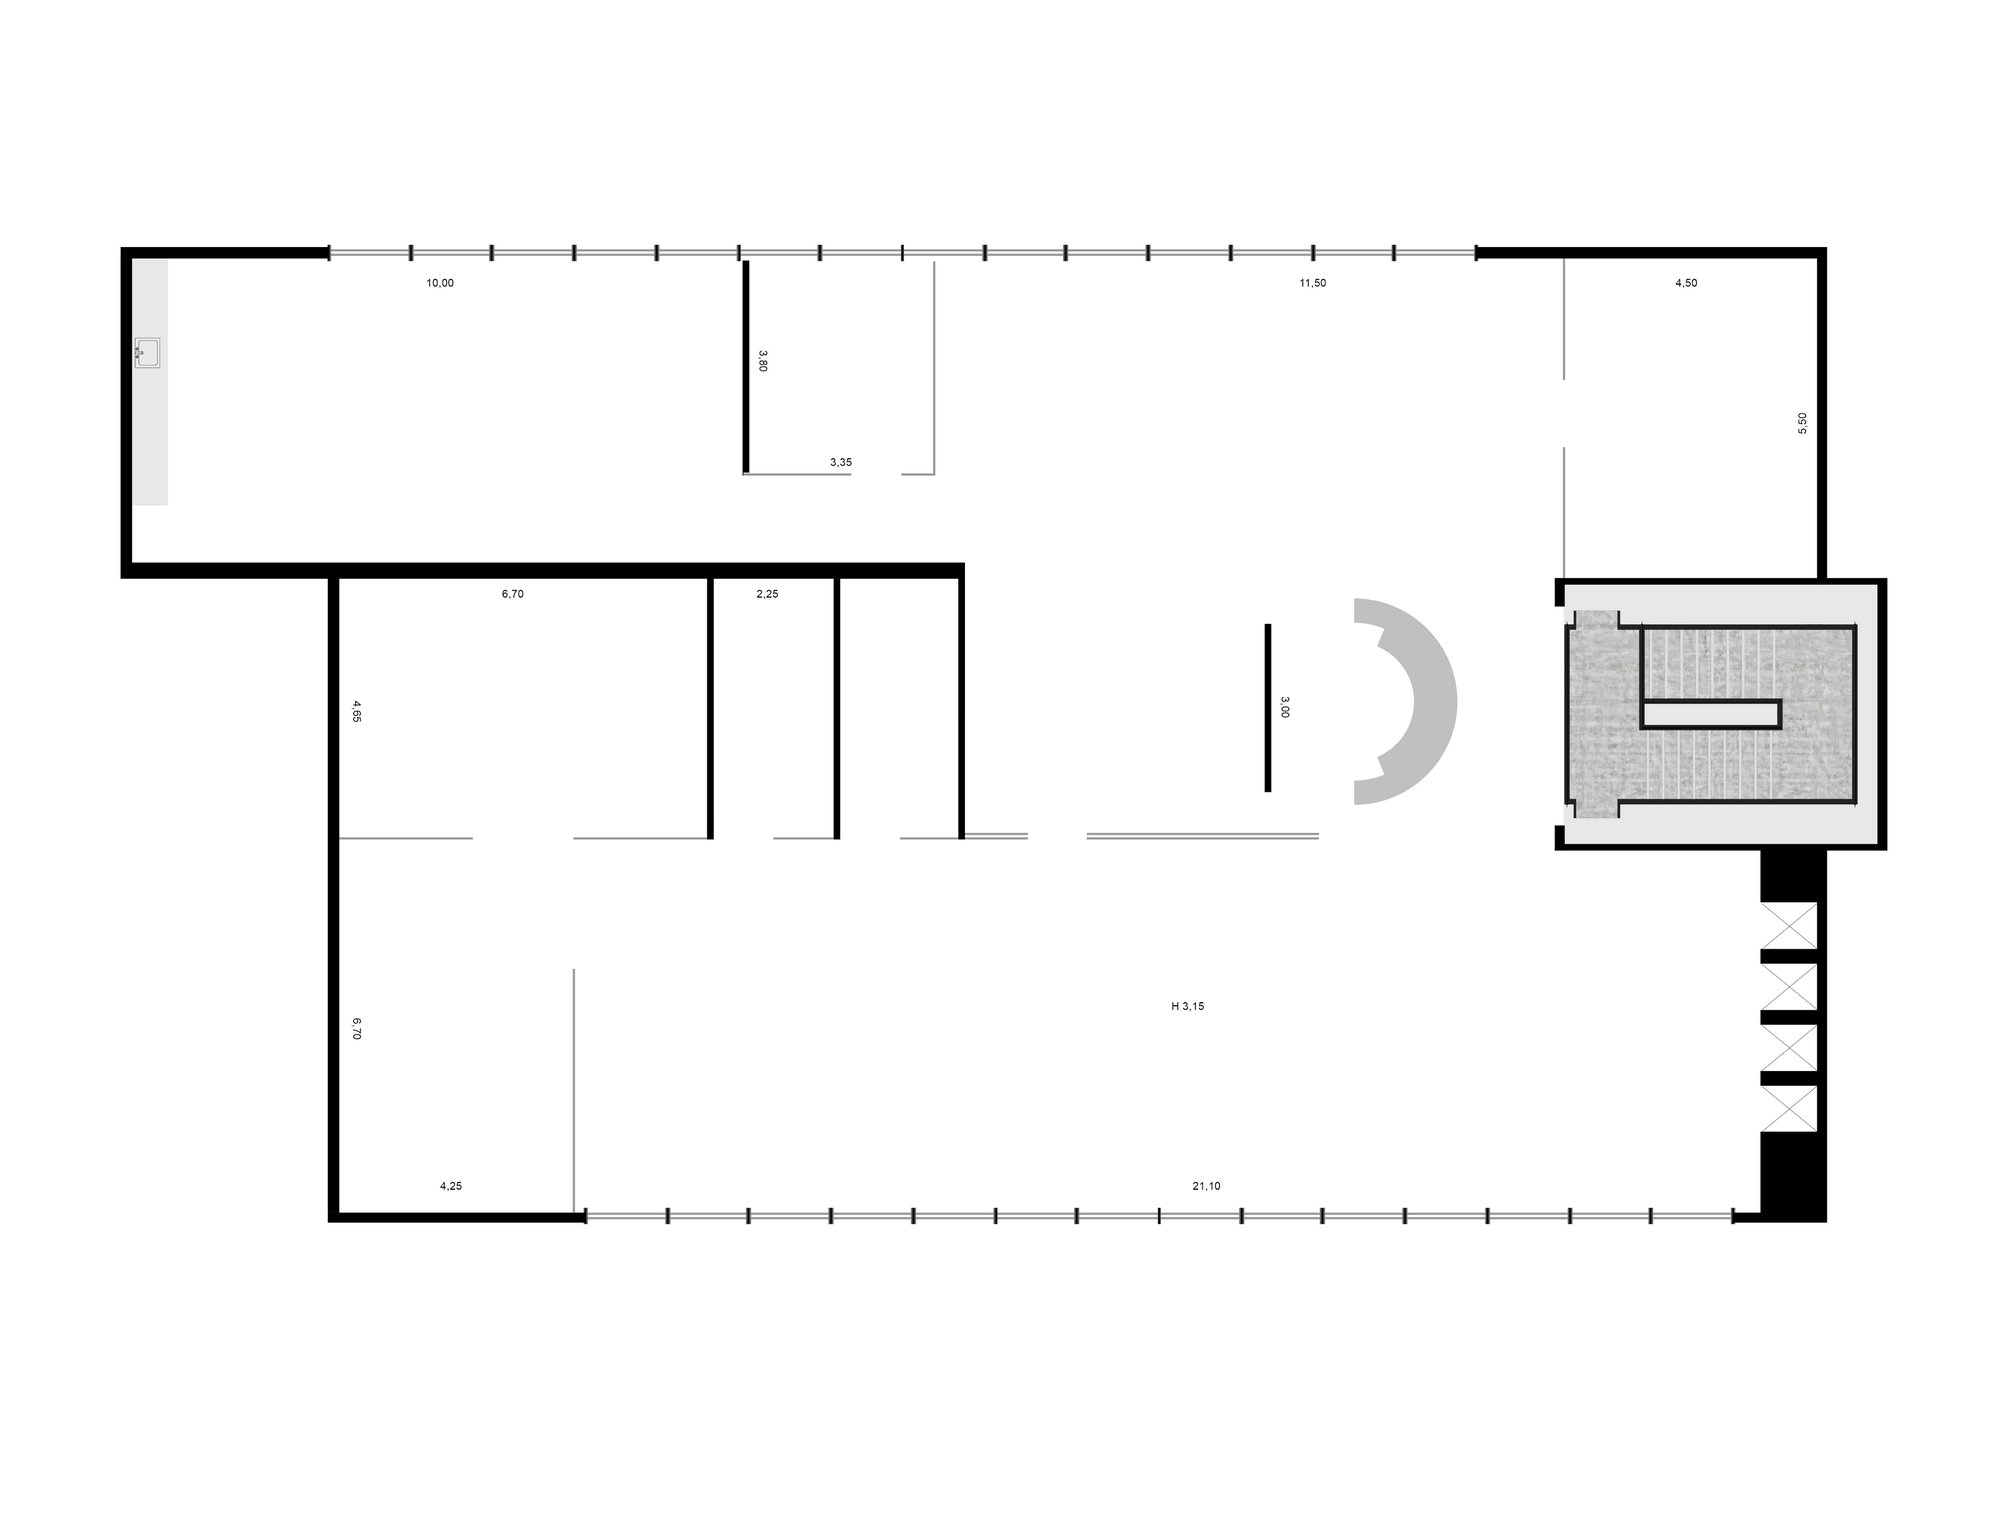 Location_18_Floorplan